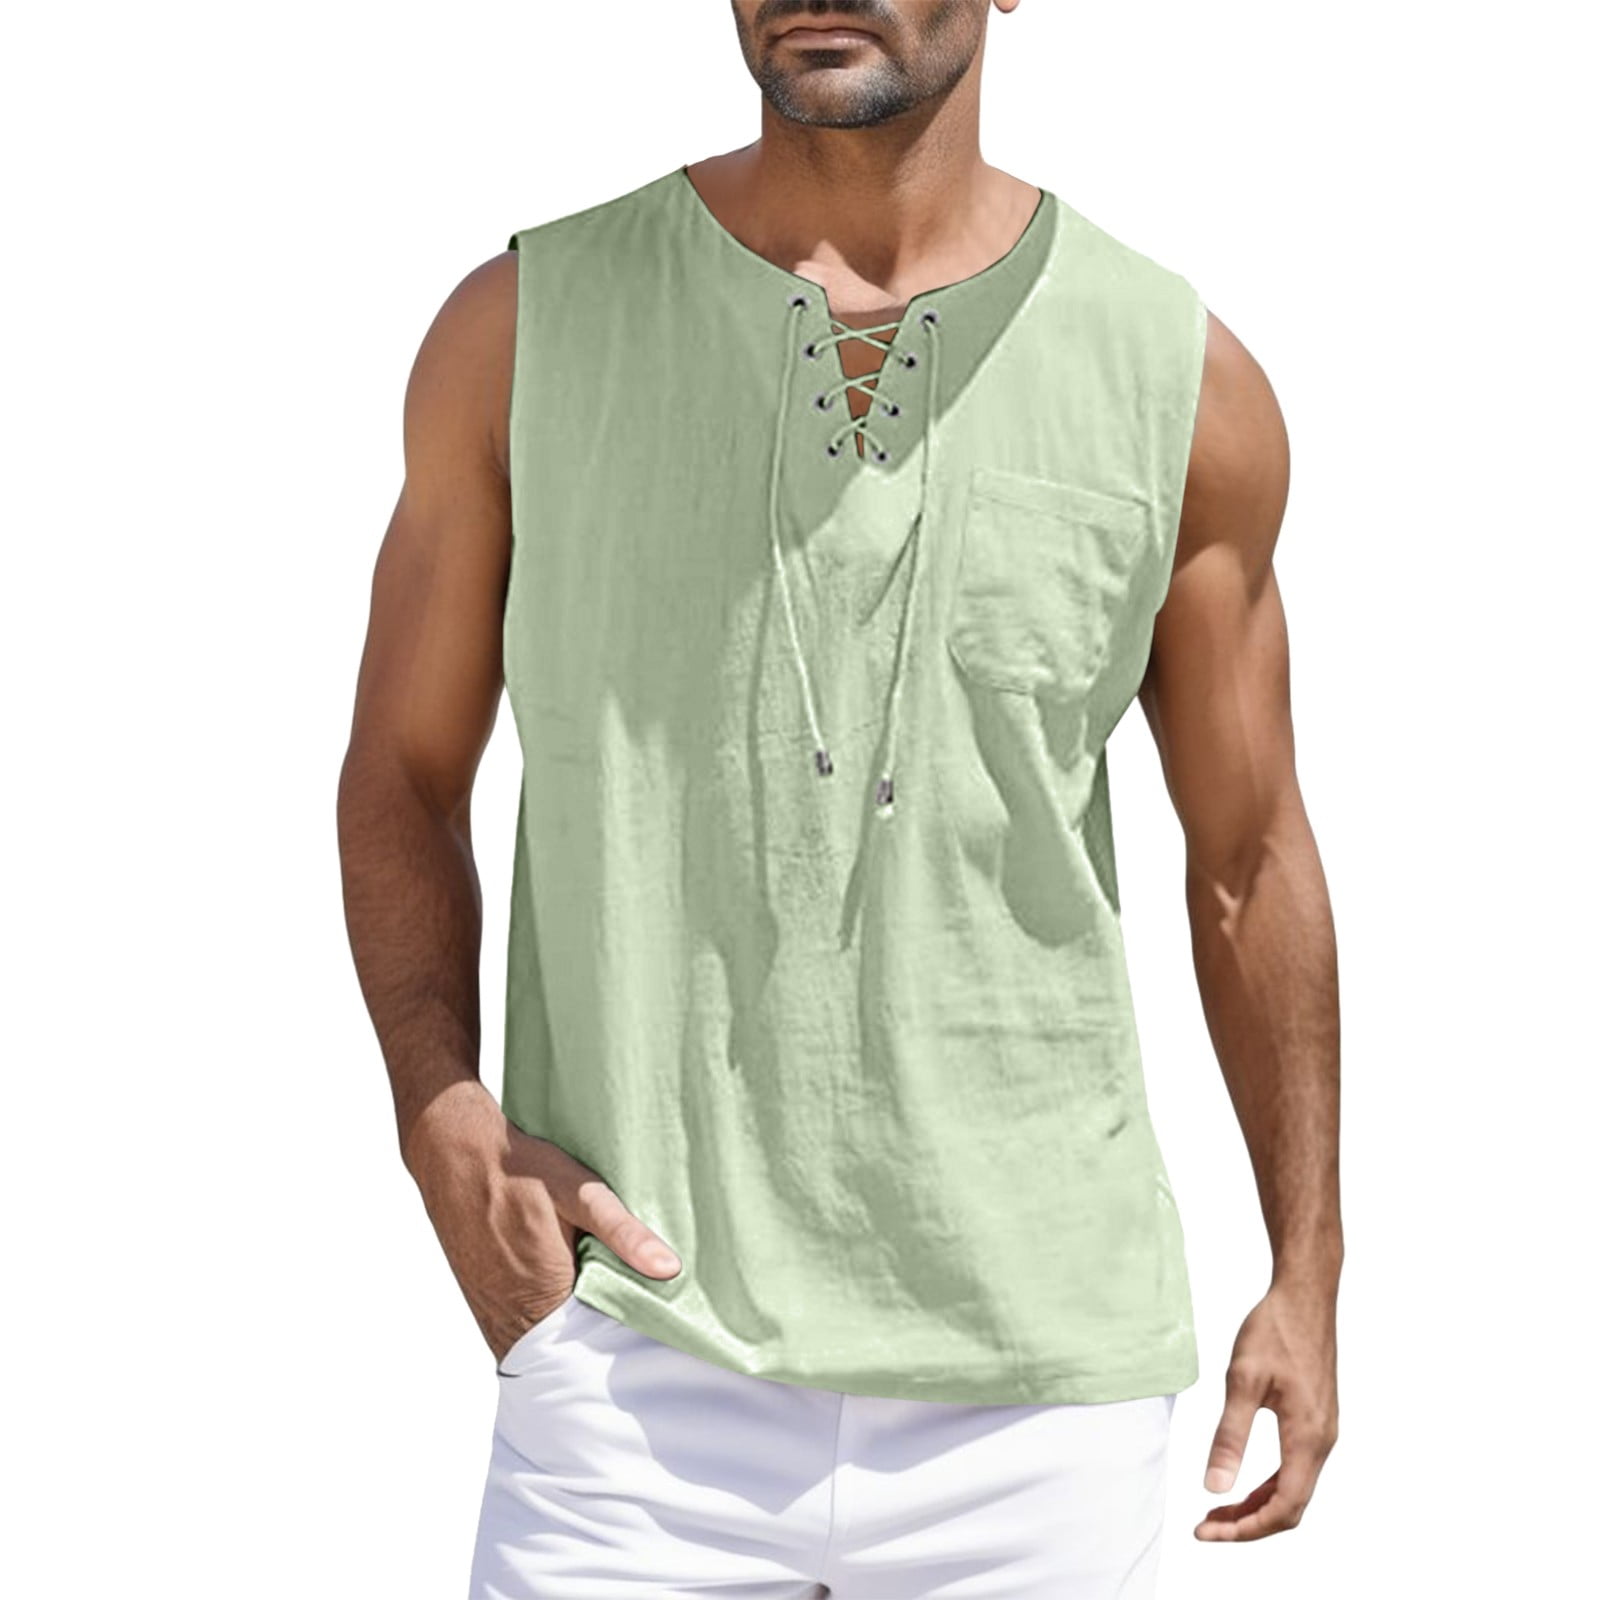 undershirts for men packcompression t shirts for men Mens Undershirt ...